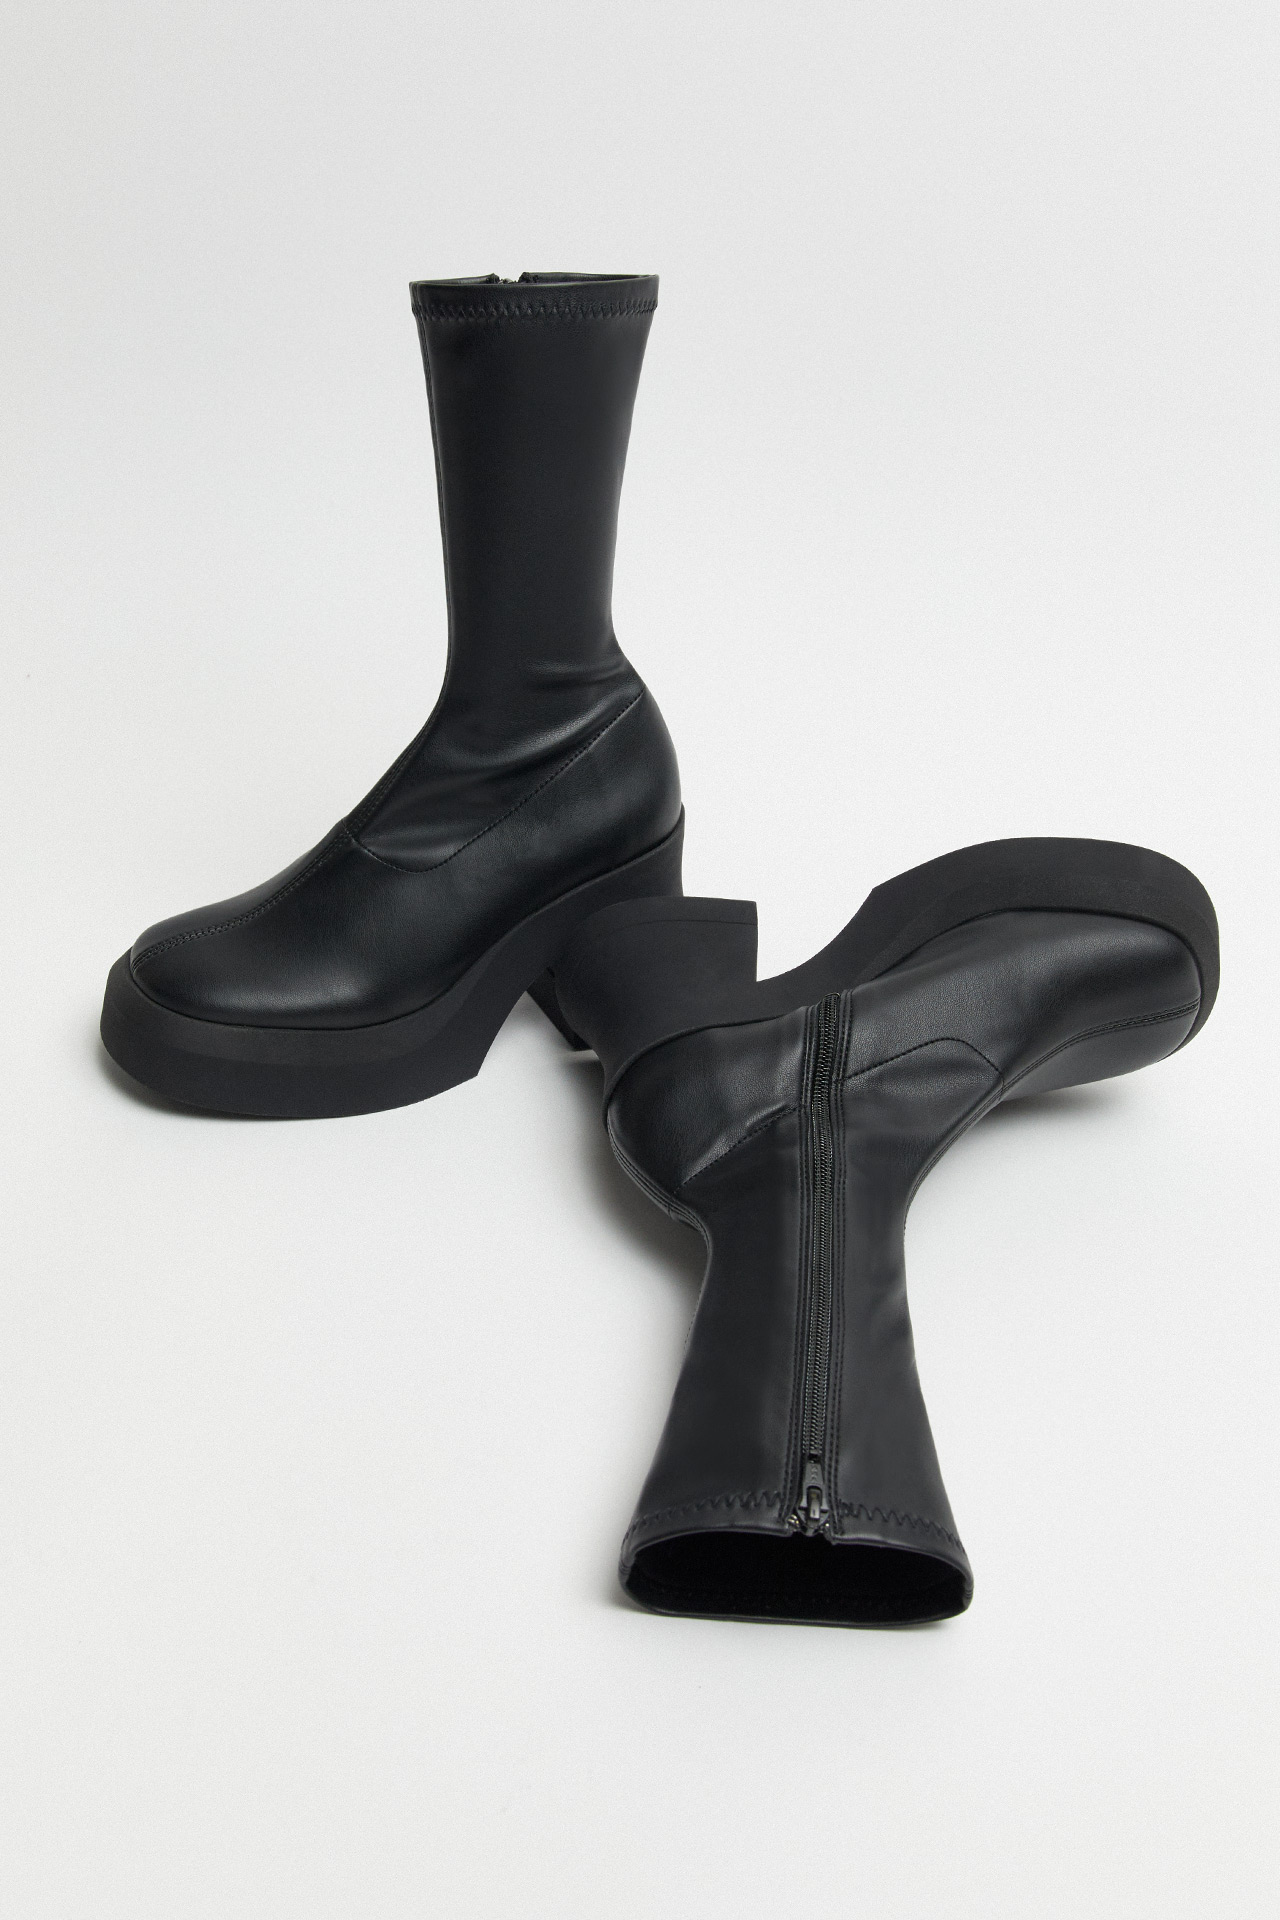 Aura Black Boots | Miista Europe | Made in Portugal